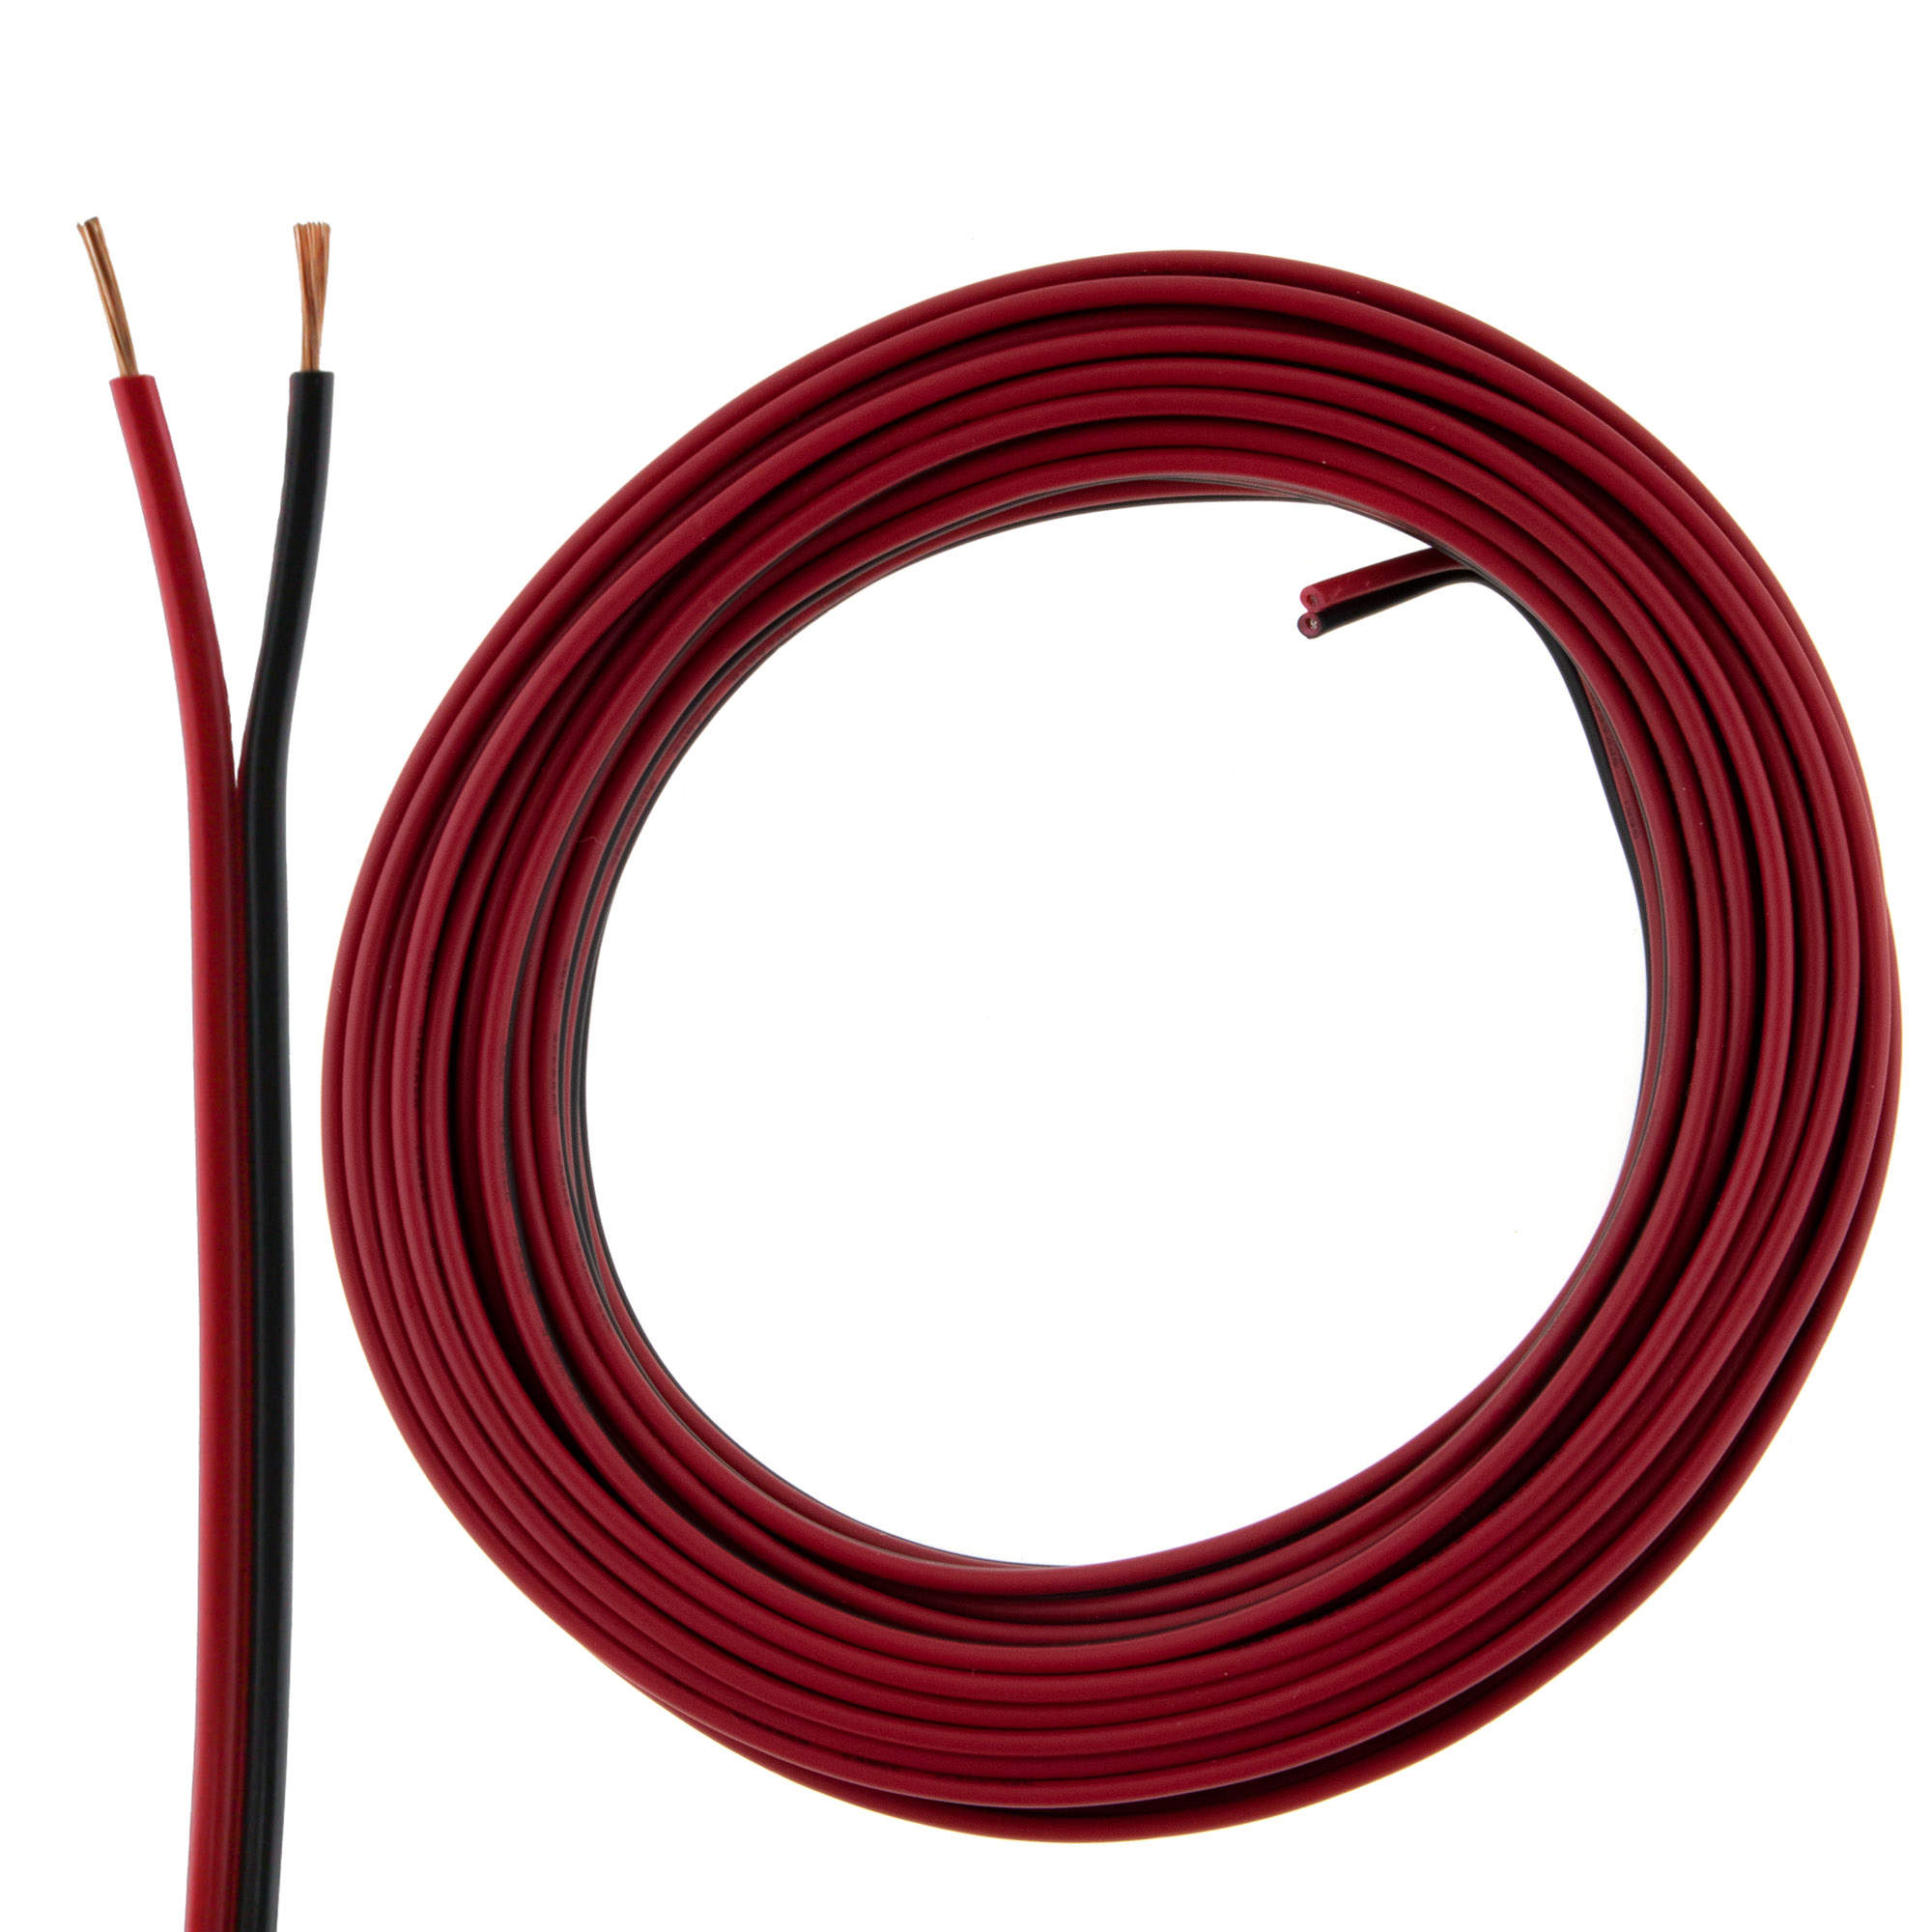 Loudspeaker cable red-black 10m 0.50mm